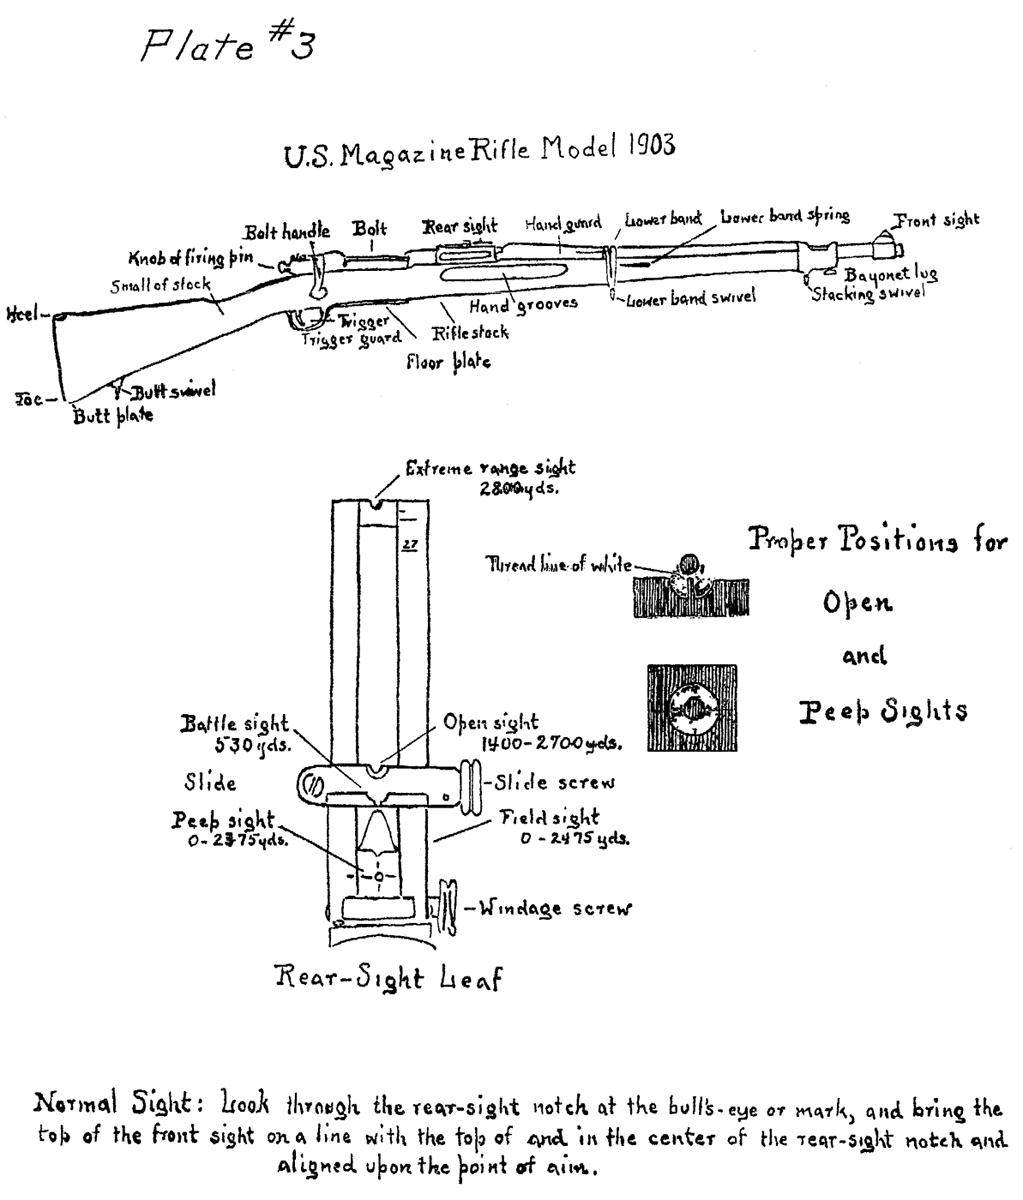 Plate 3: U.S. Magazine Rifle Model 1903